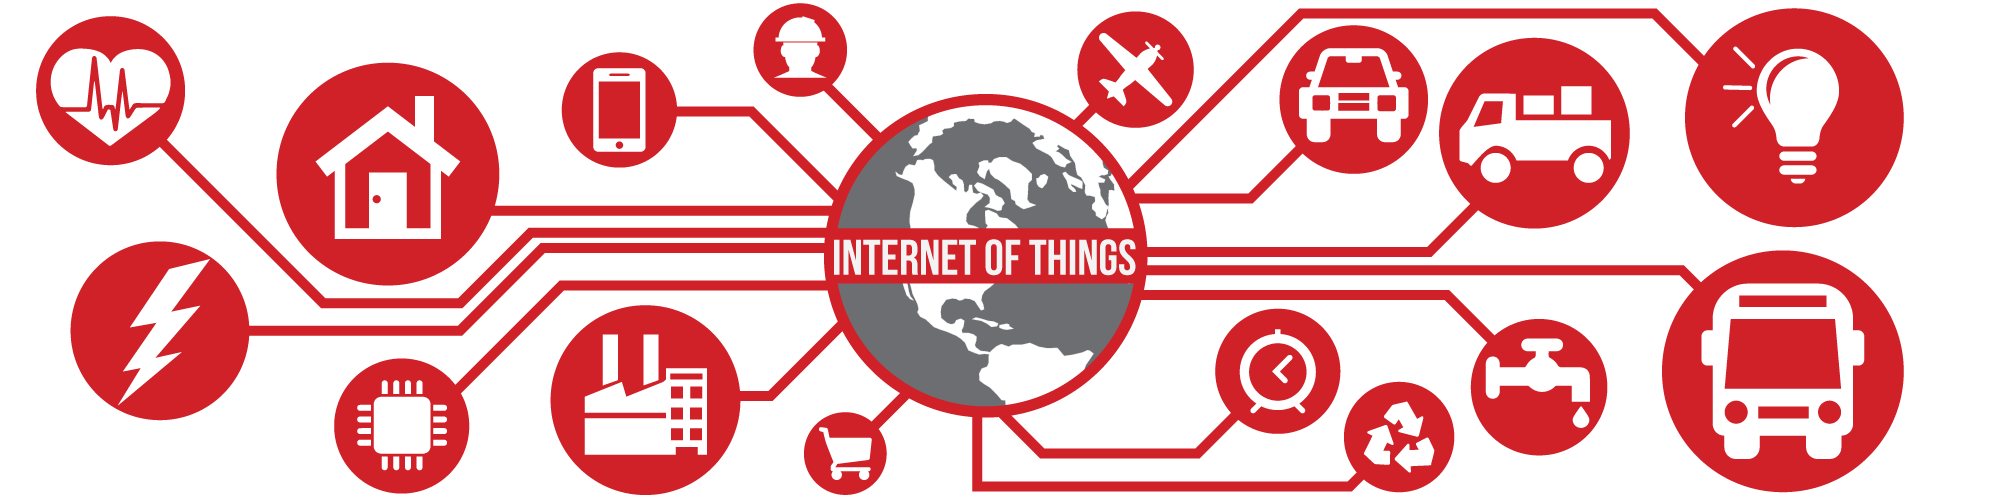 Red Internet Logo - Realtime Networks: The New Super Internet for Data | PubNub